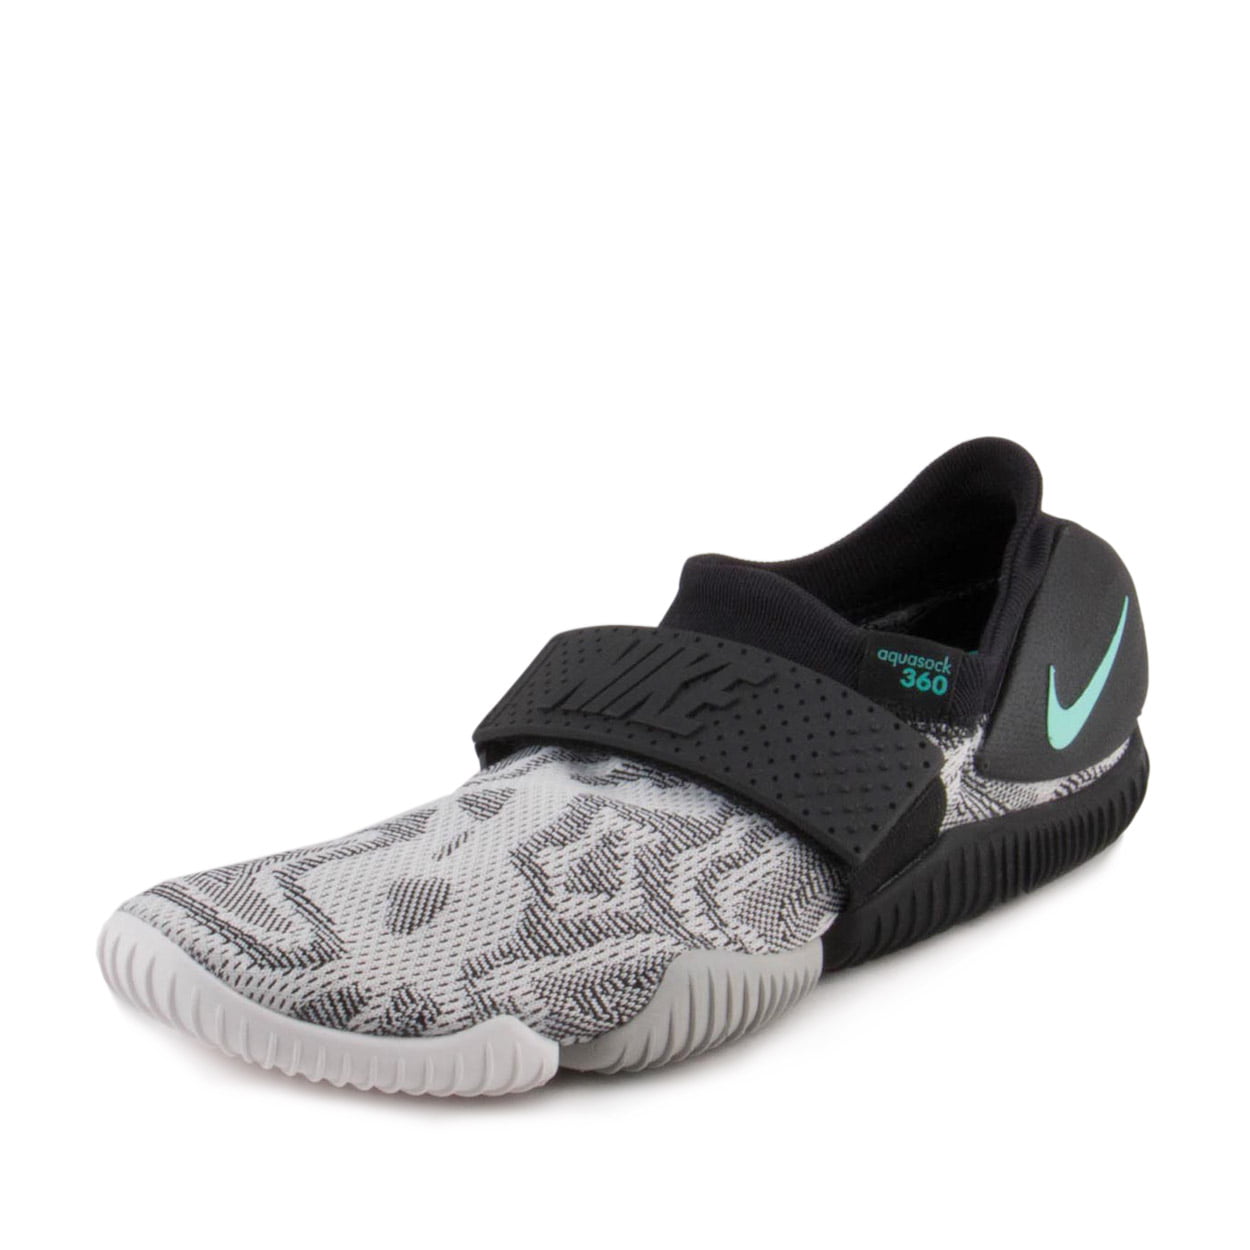 Nike Mens Aqua Sock 360 QS Black/Turbo-Ivory 902782-002 - Walmart.com